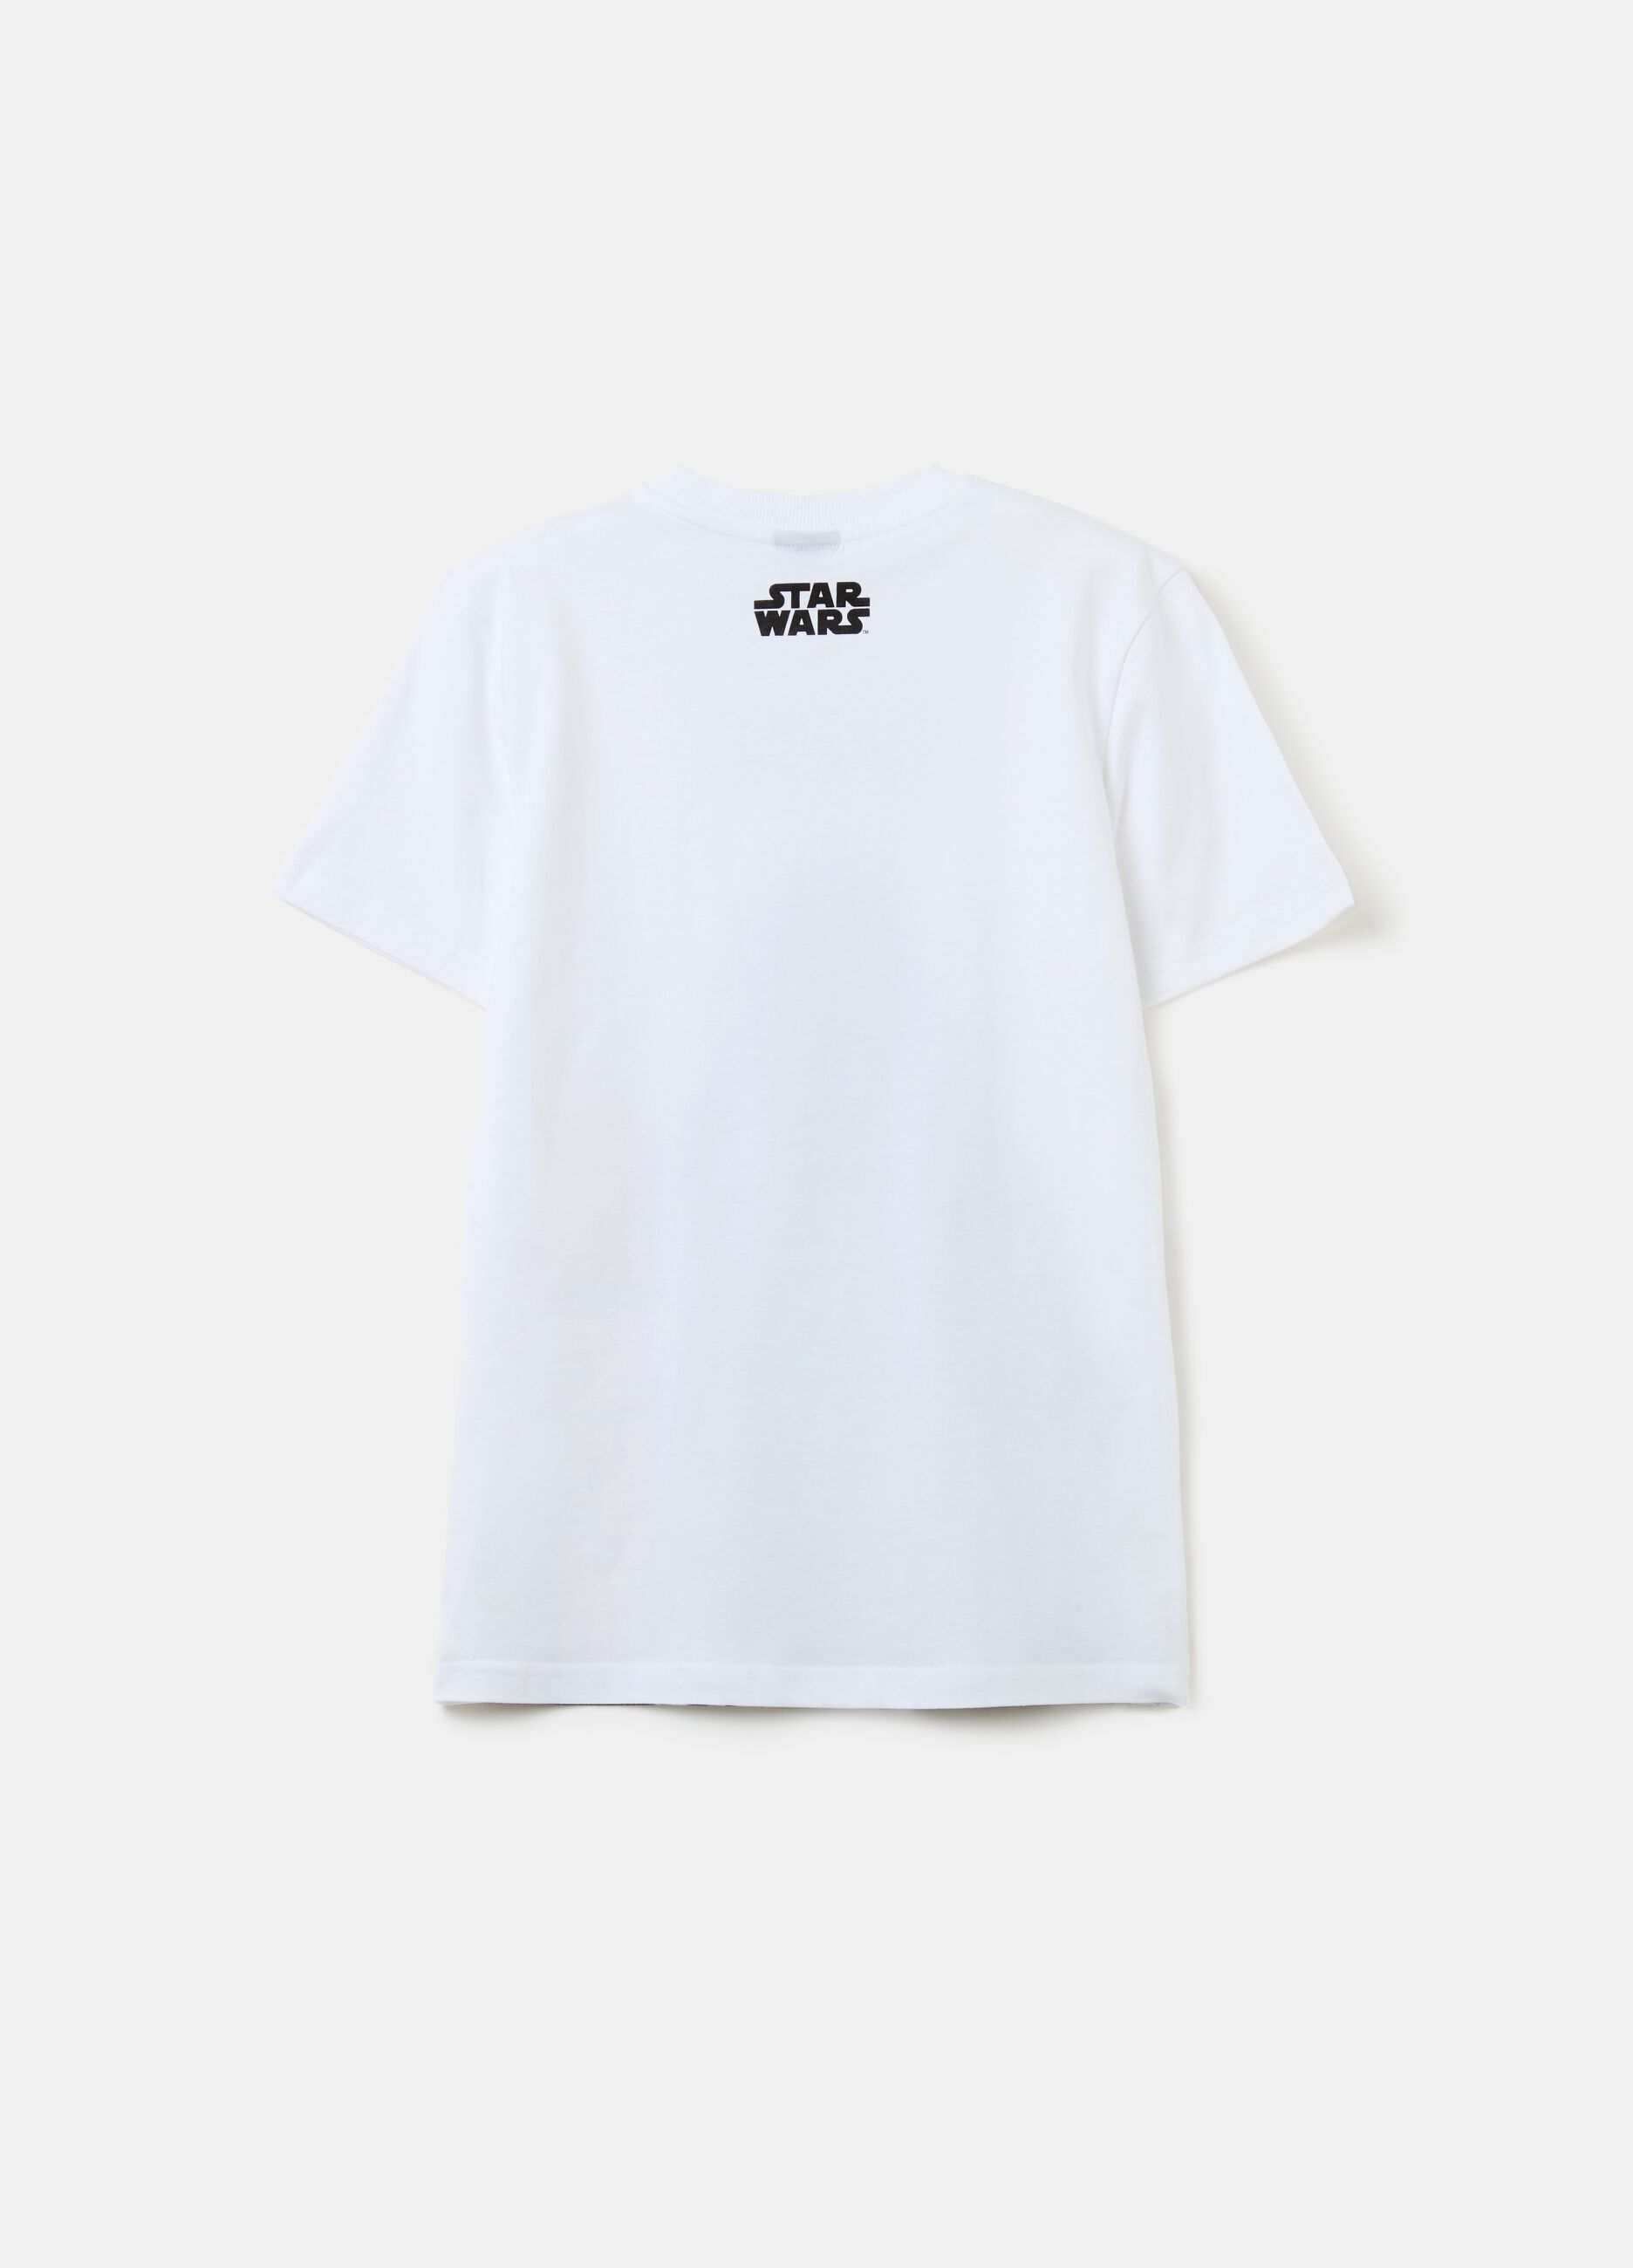 T-shirt in cotone con stampa Darth Vader